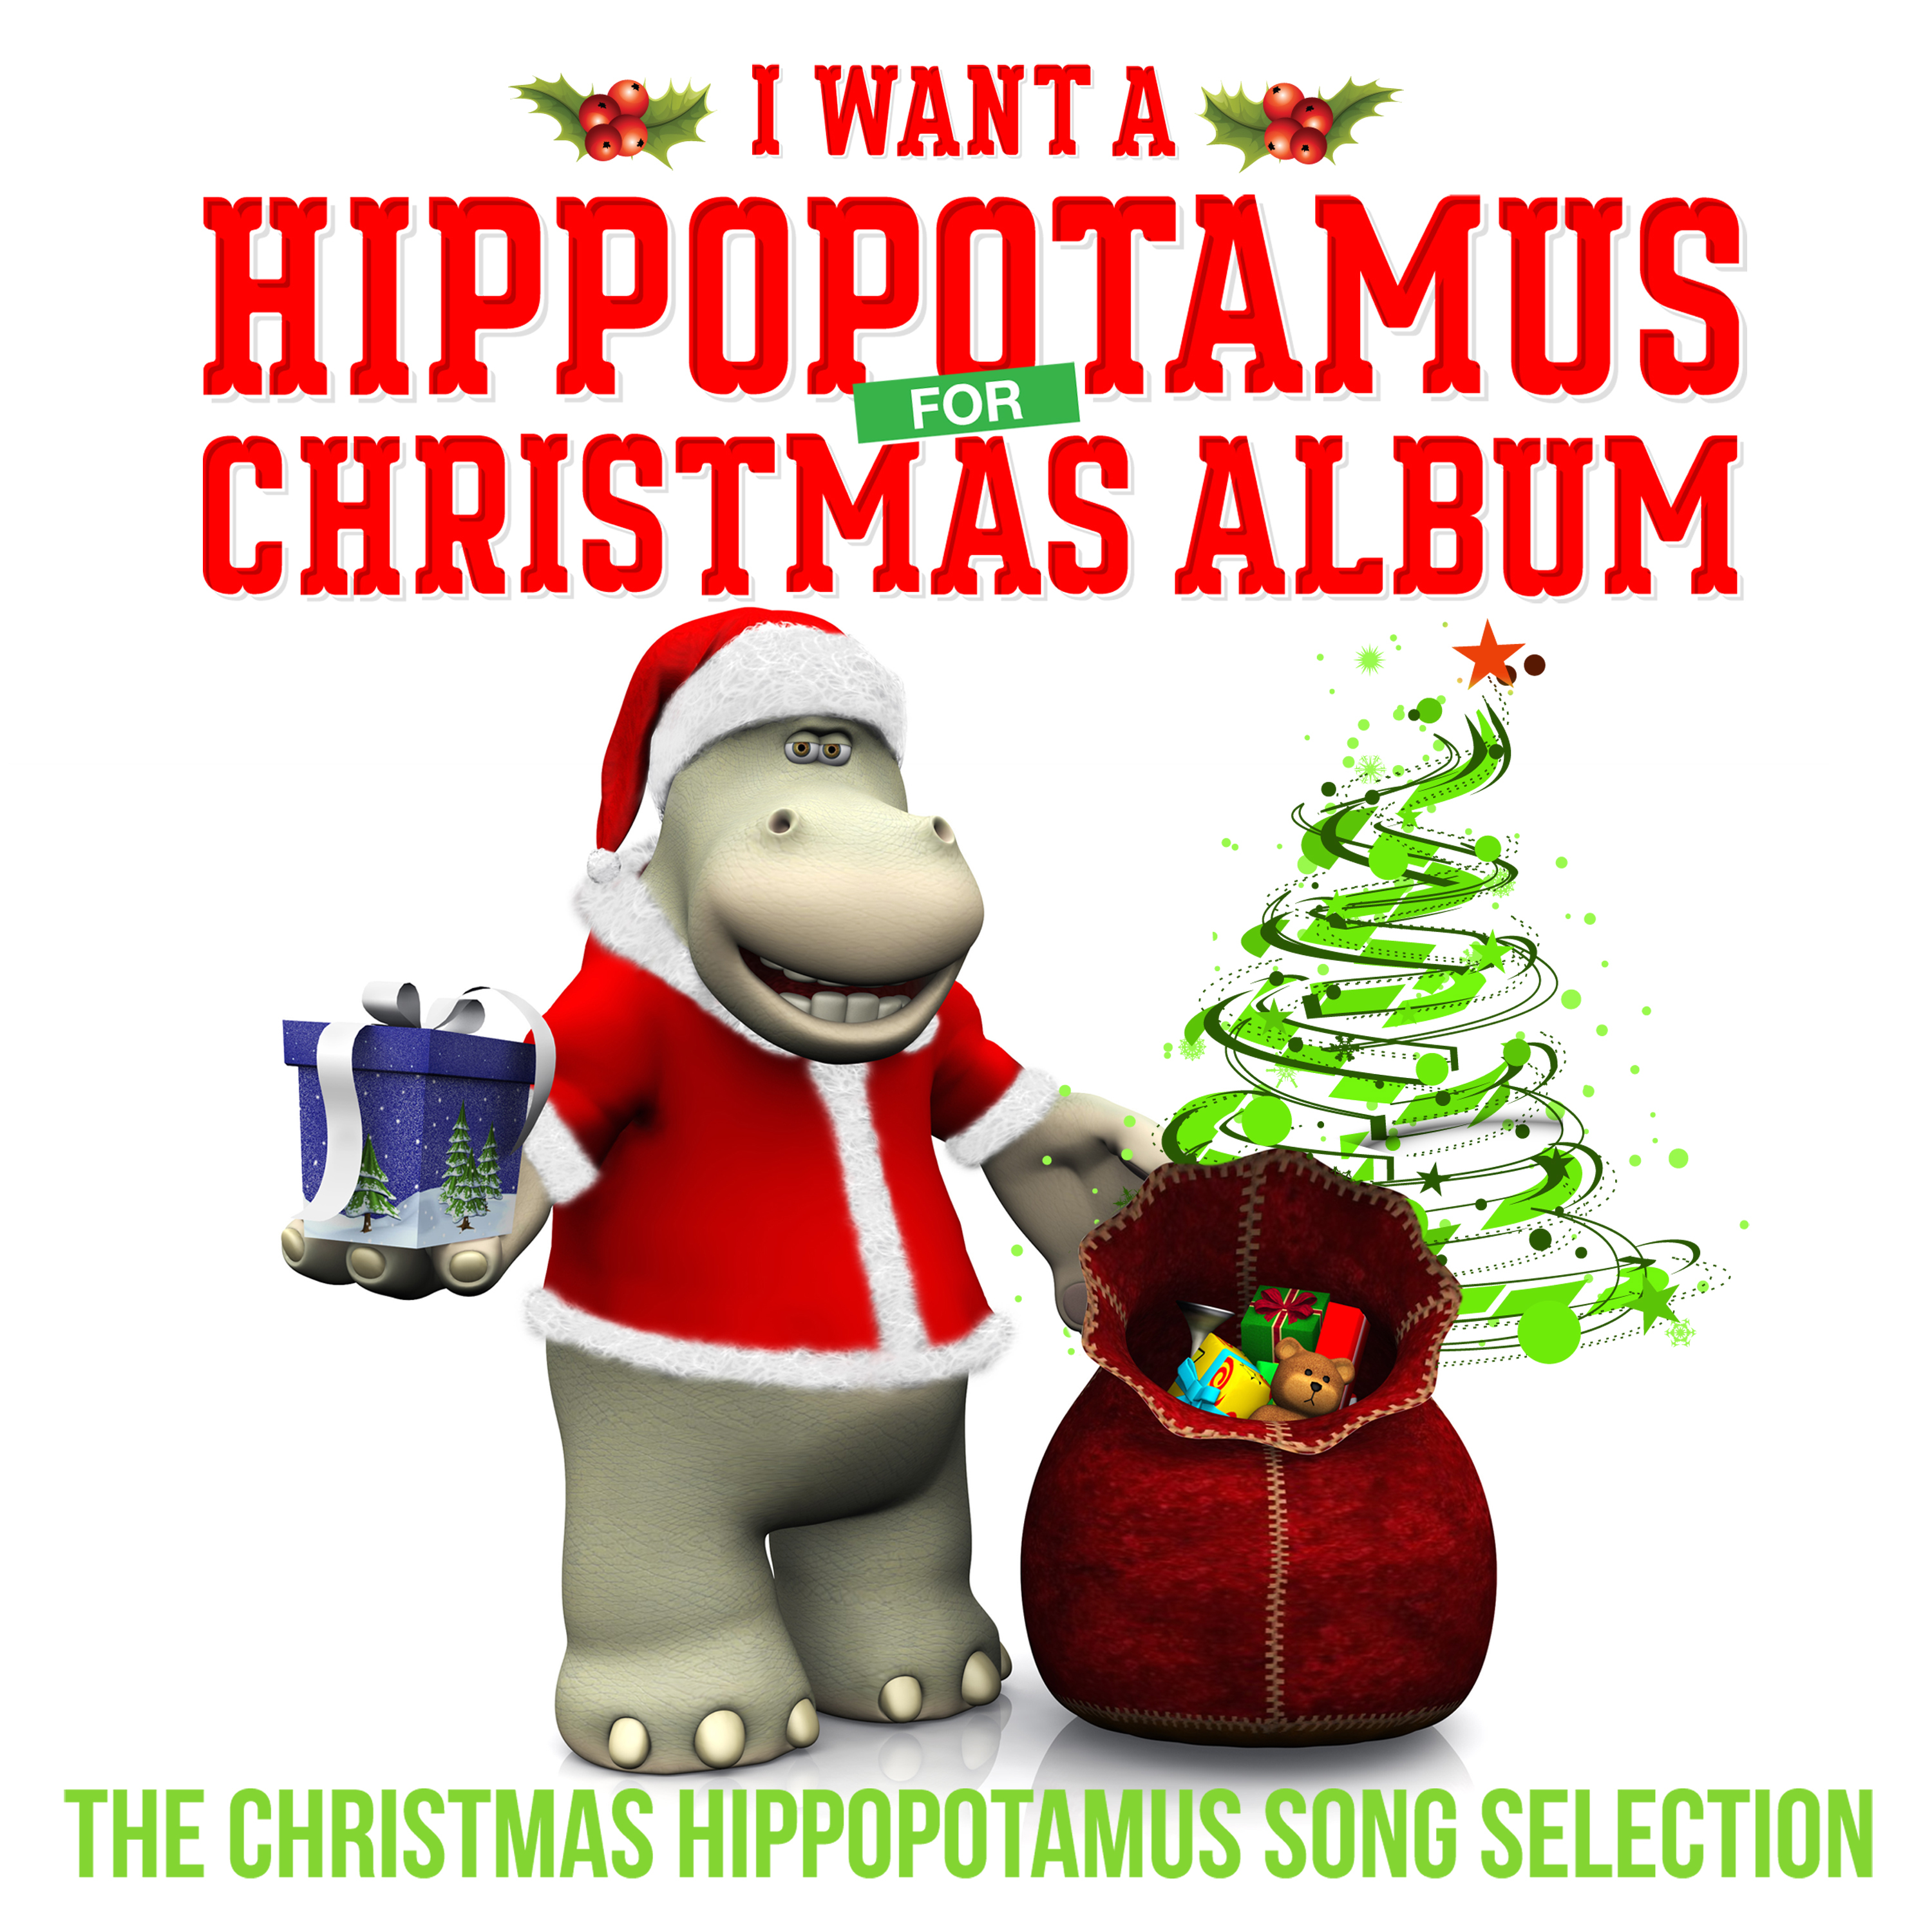 I Want a Hippopotamus for Christmas Album - The Christmas Hippopotamus Song Selection